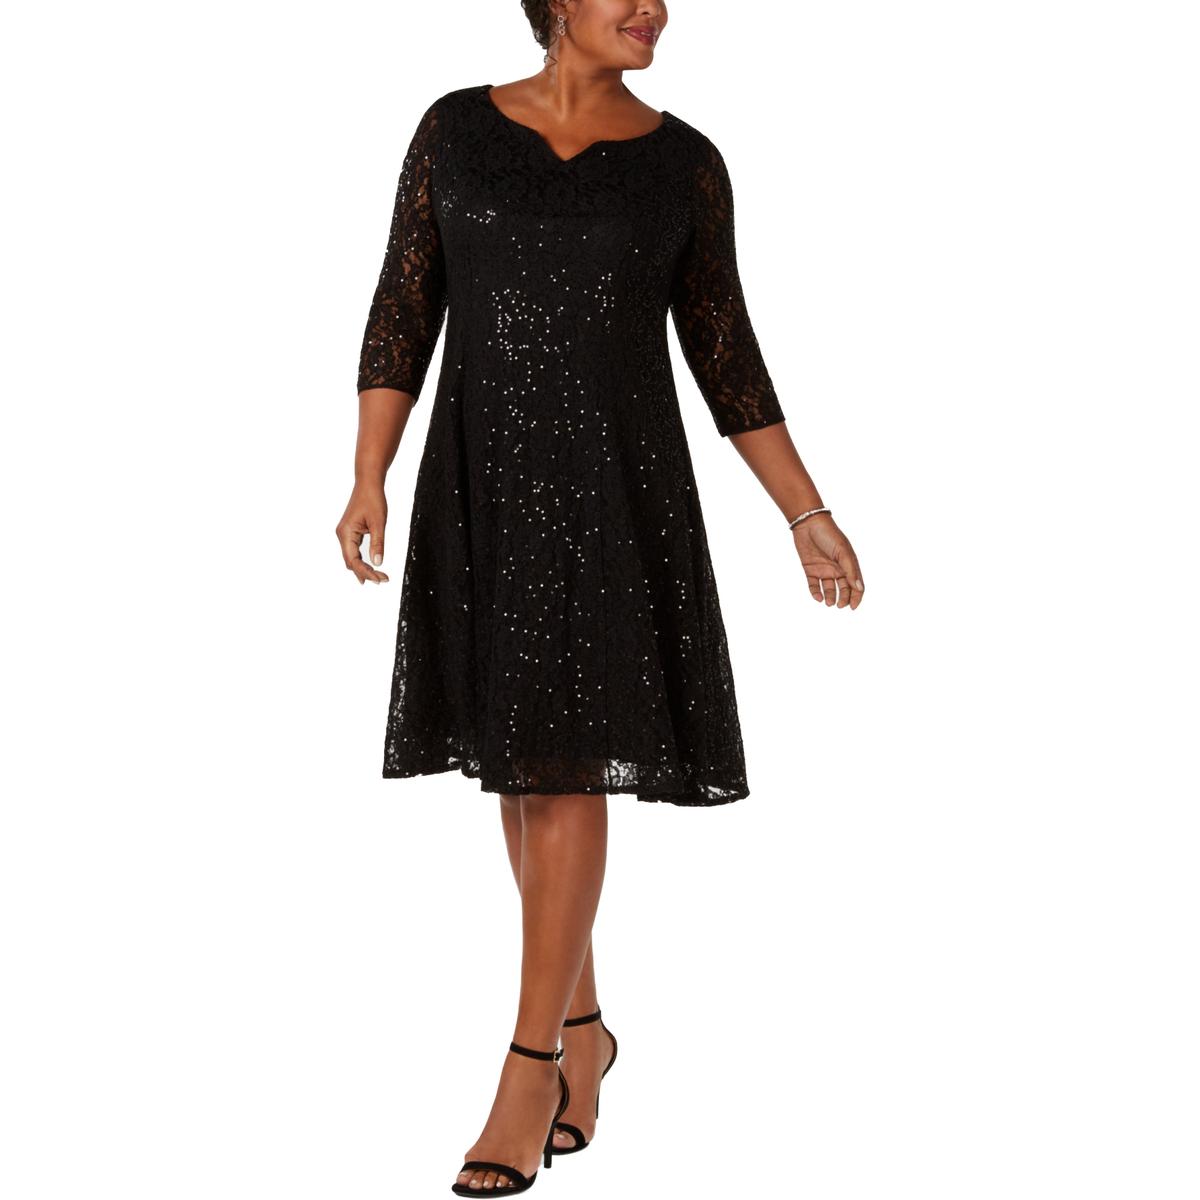 SLNY Womens Black Sequined Lace Party Cocktail Dress 22W BHFO 5664 | eBay